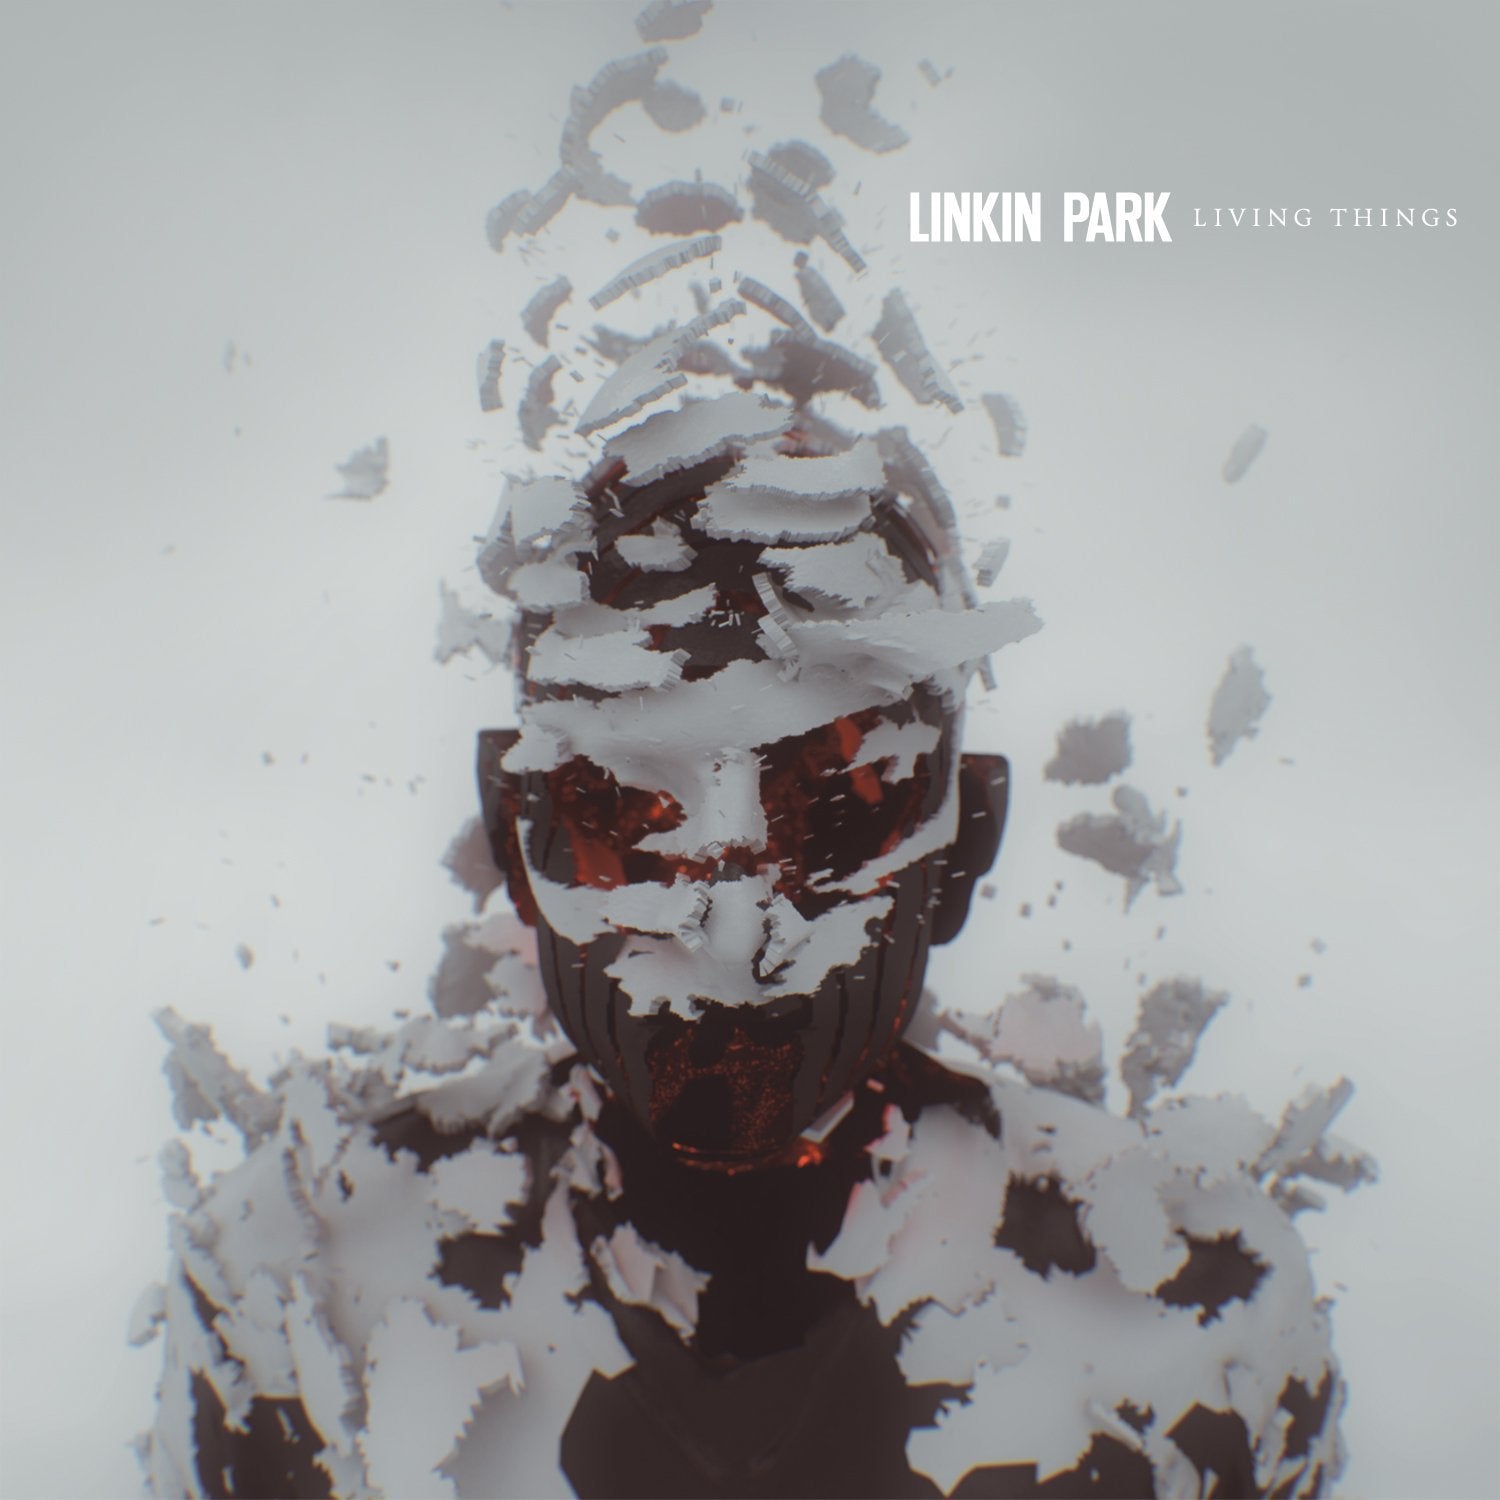 Linkin Park "Living Things" Vinyl